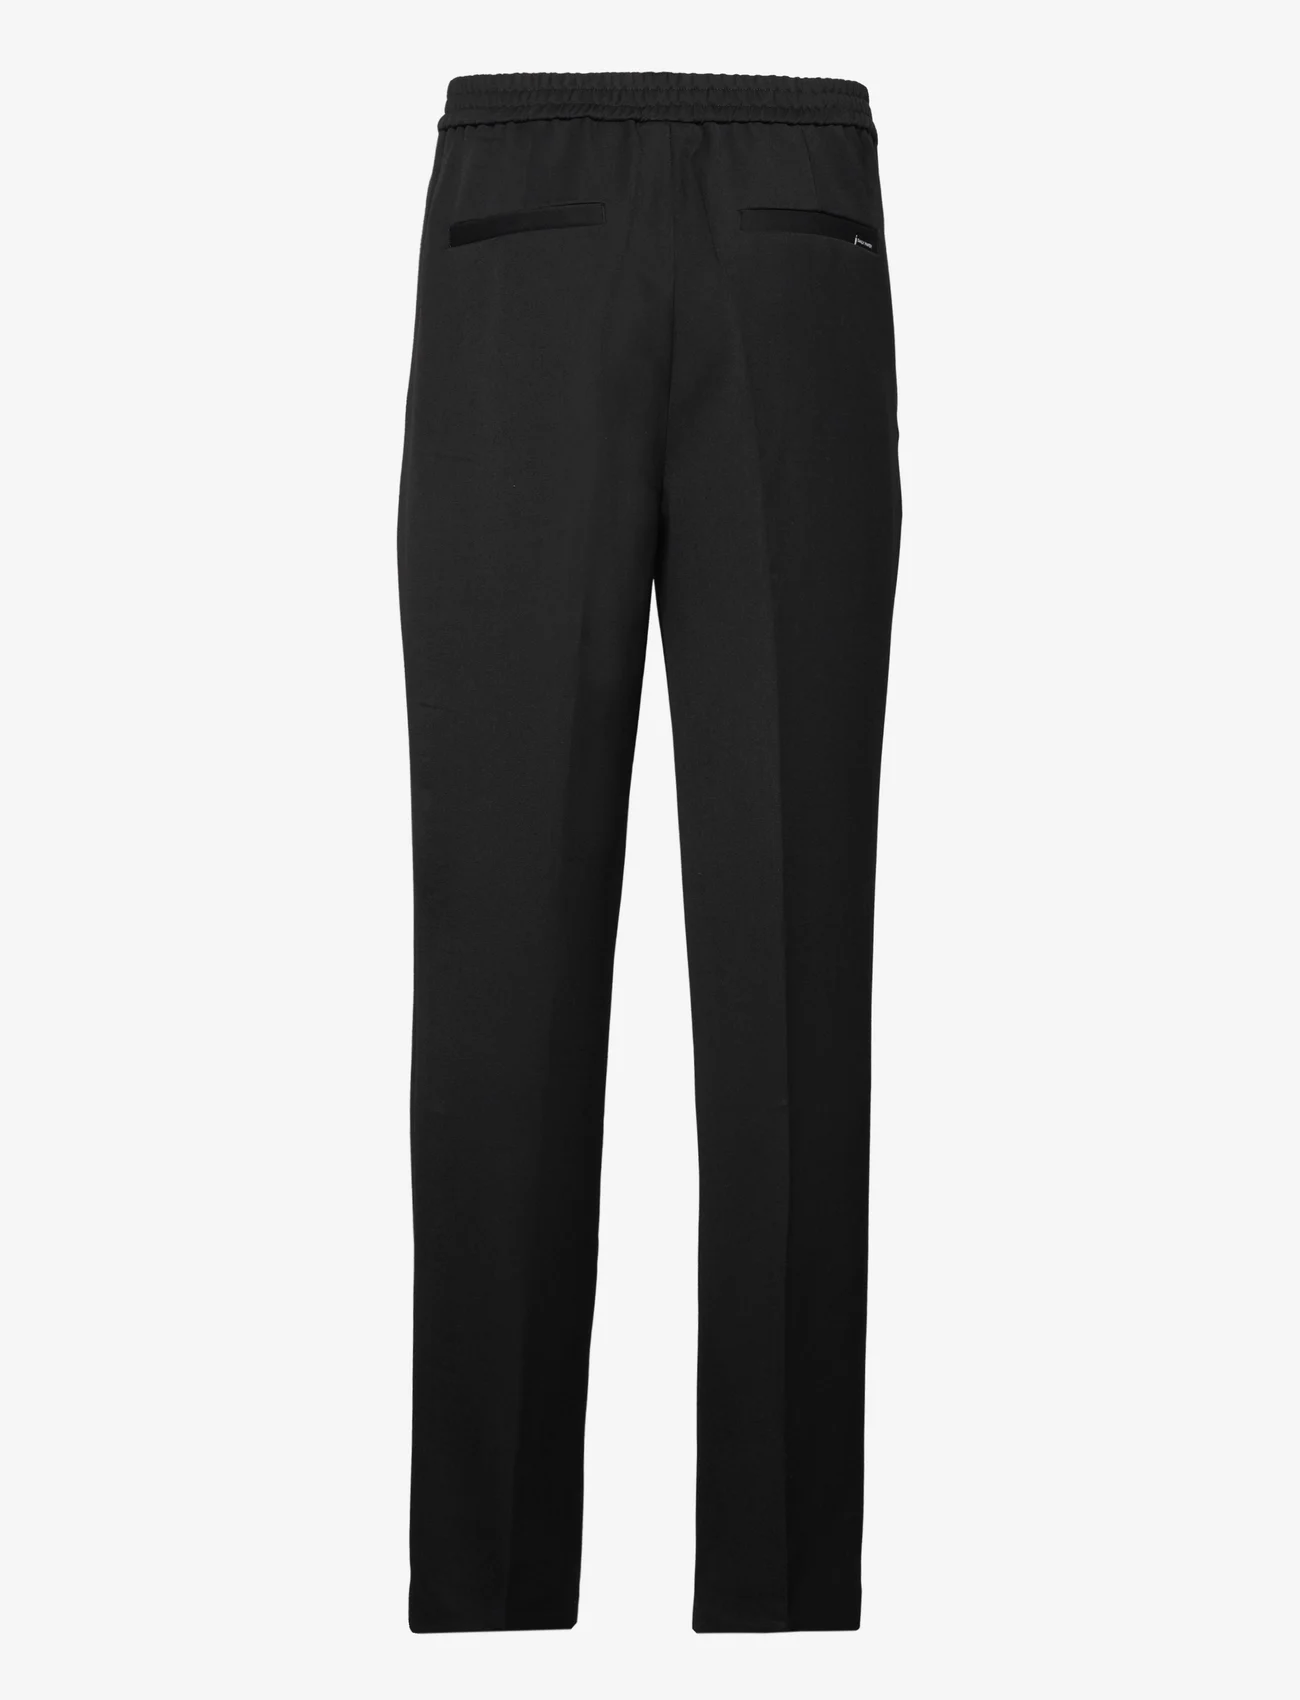 Daily Paper - ransel pants - suit trousers - black - 1